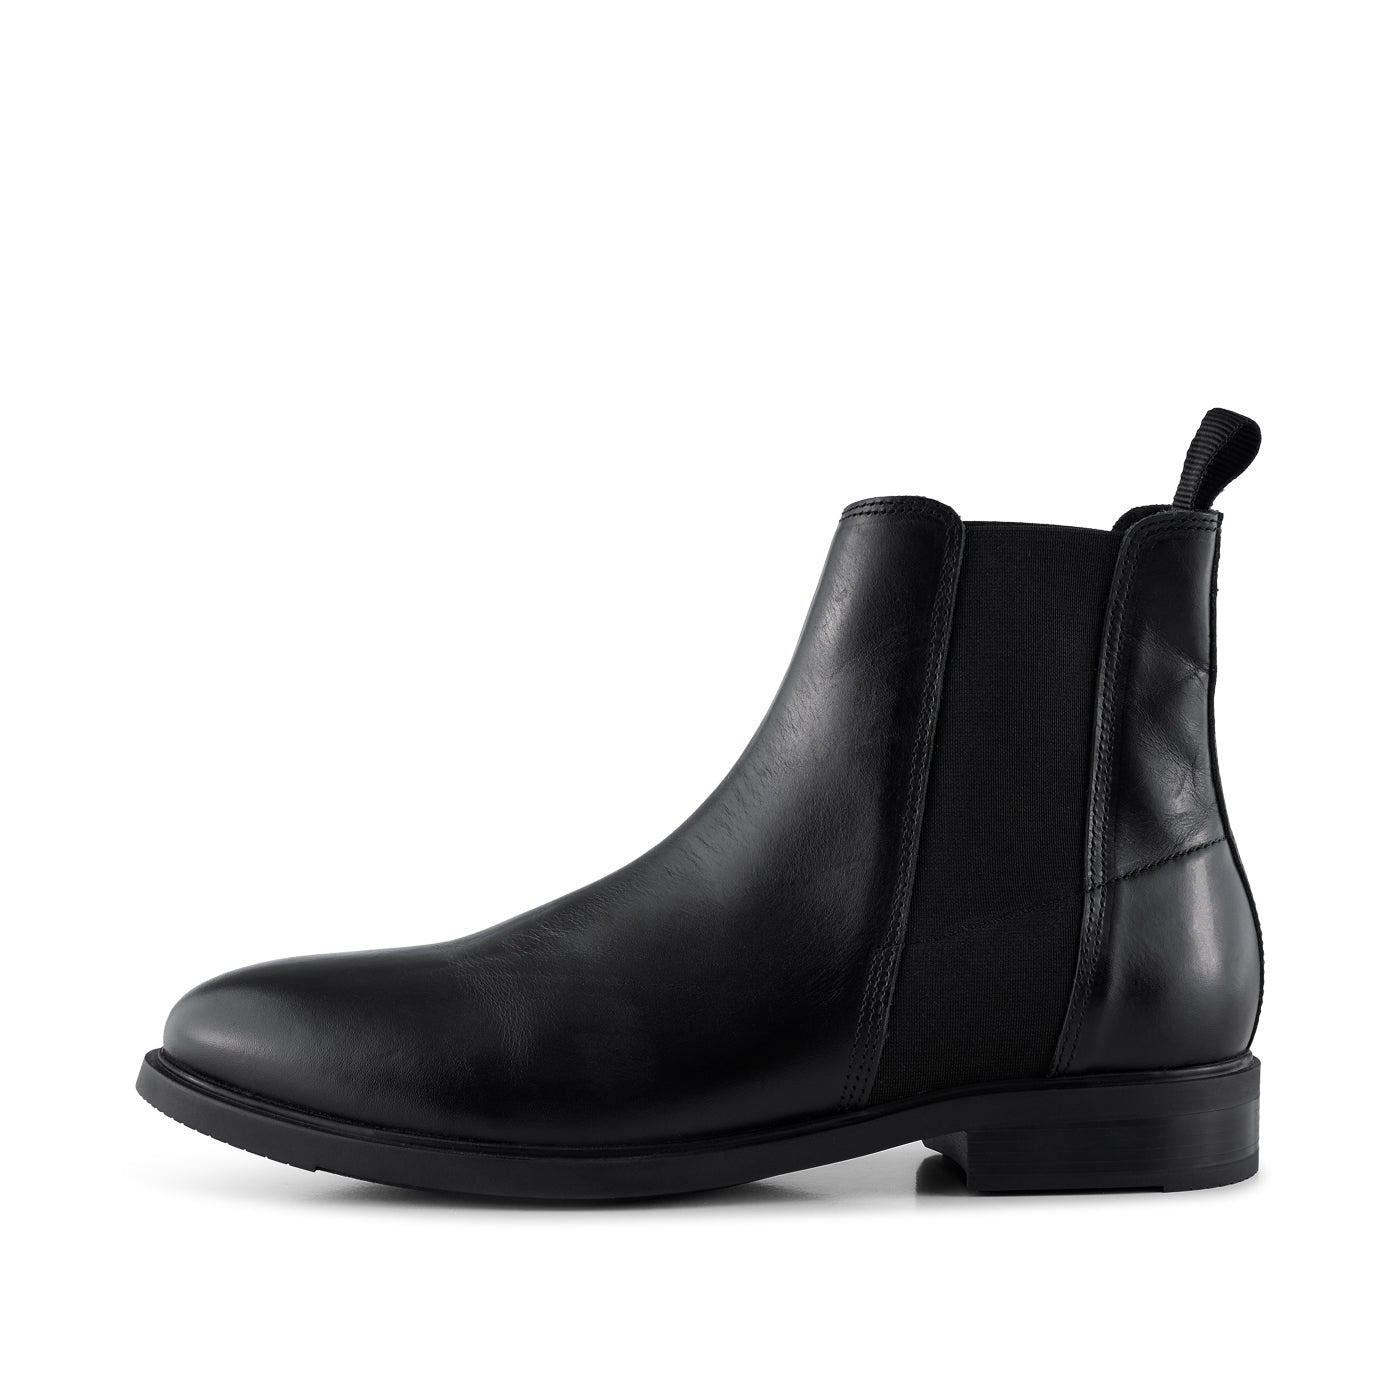 Linea chelsea boot leather - – BEAR - COM